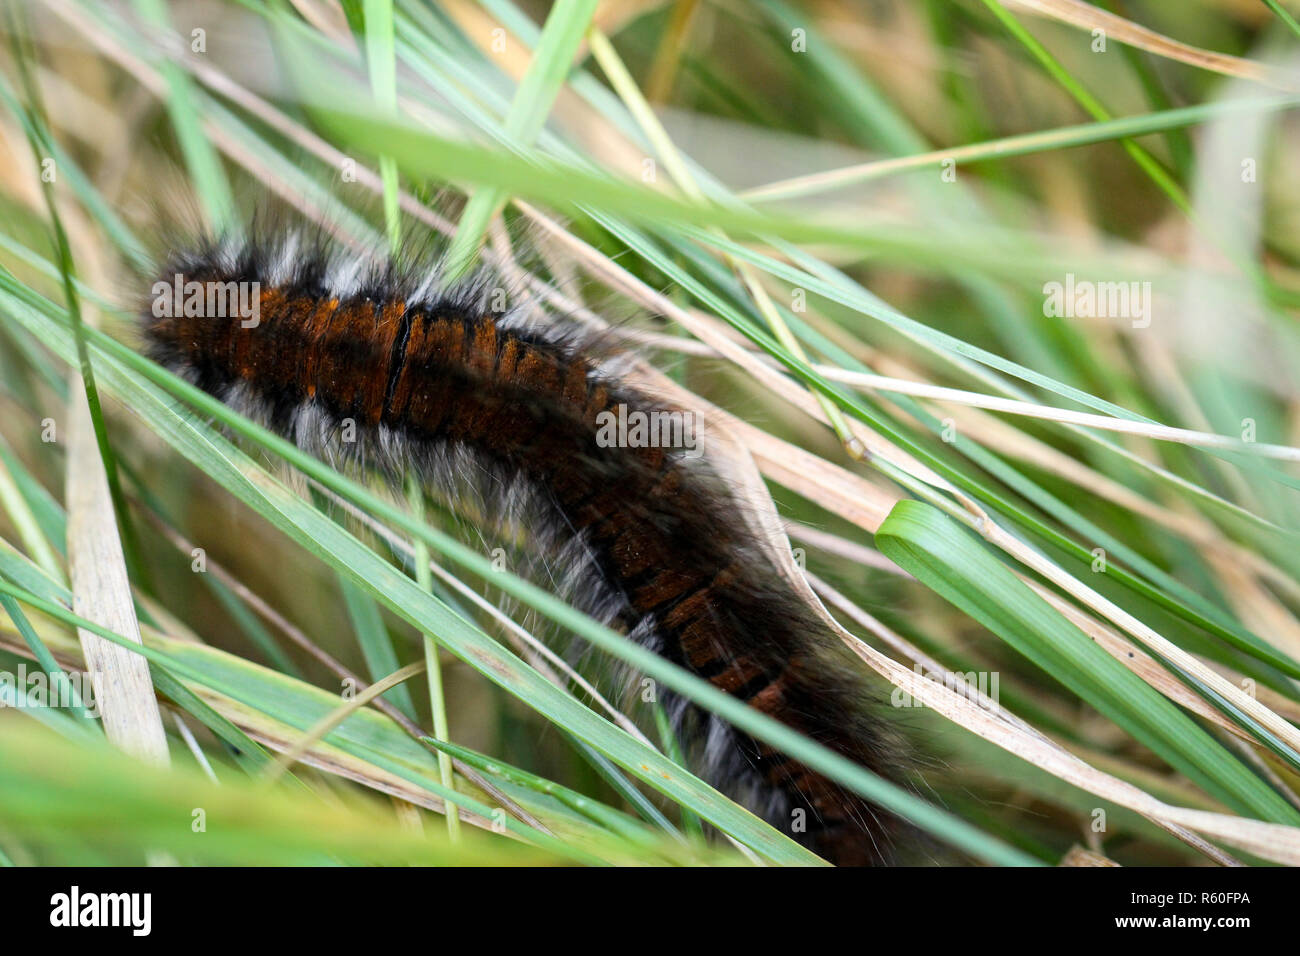 caterpillar of a blackberry spinner Stock Photo